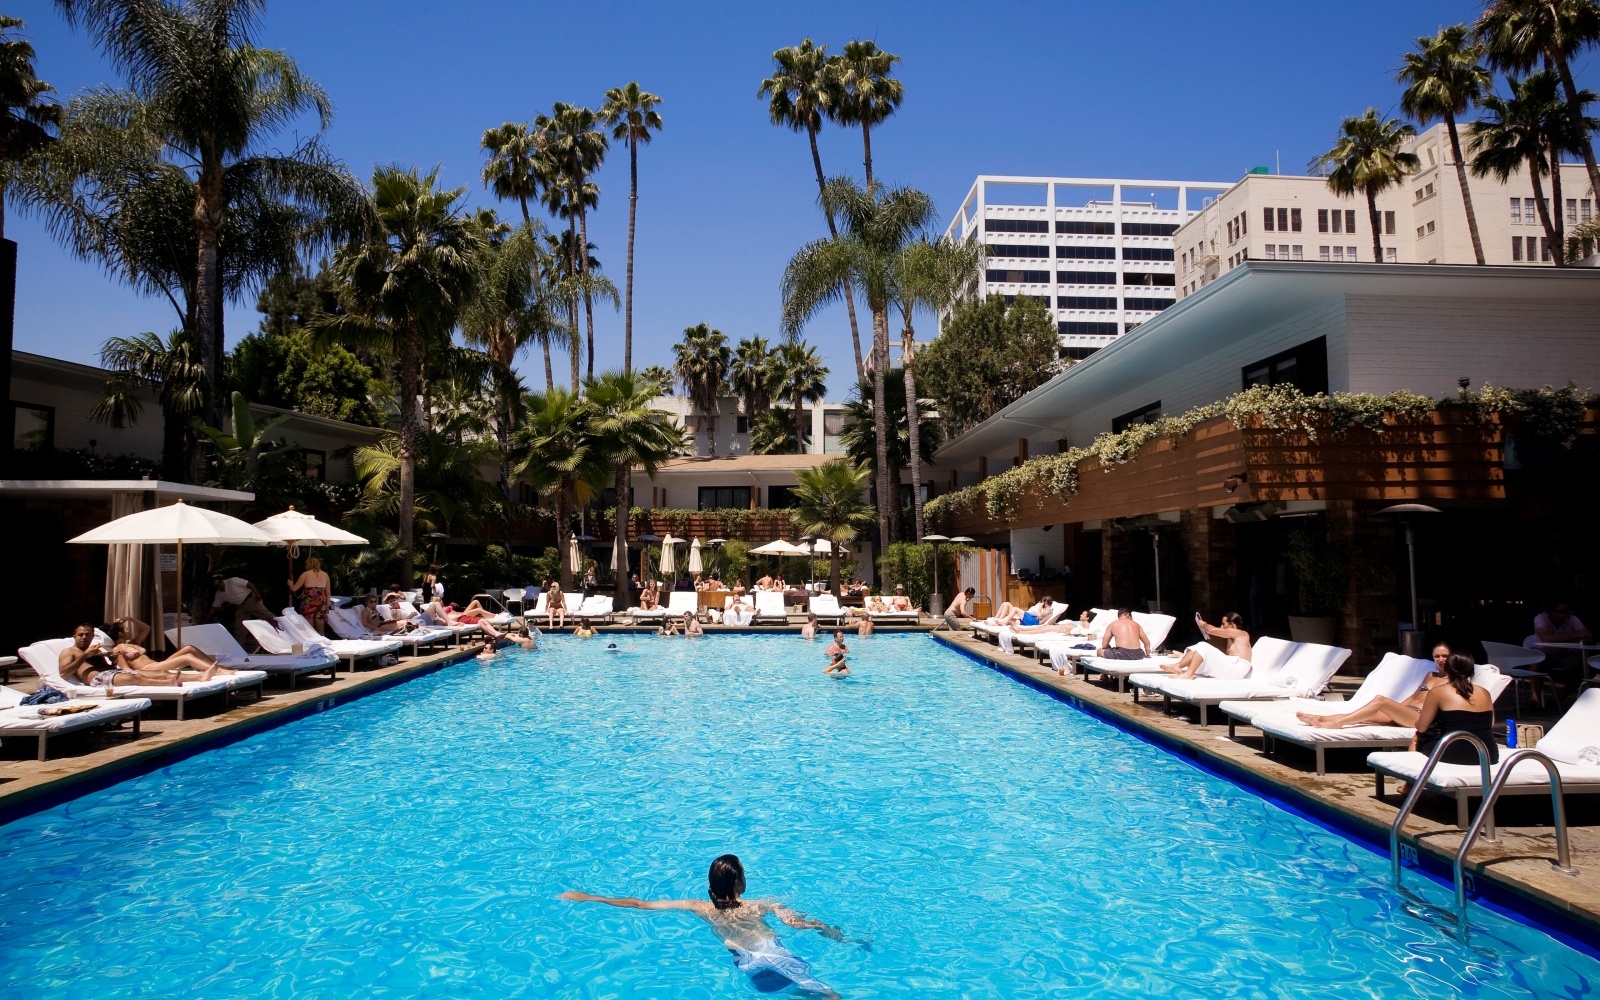 LA Hotel Pools